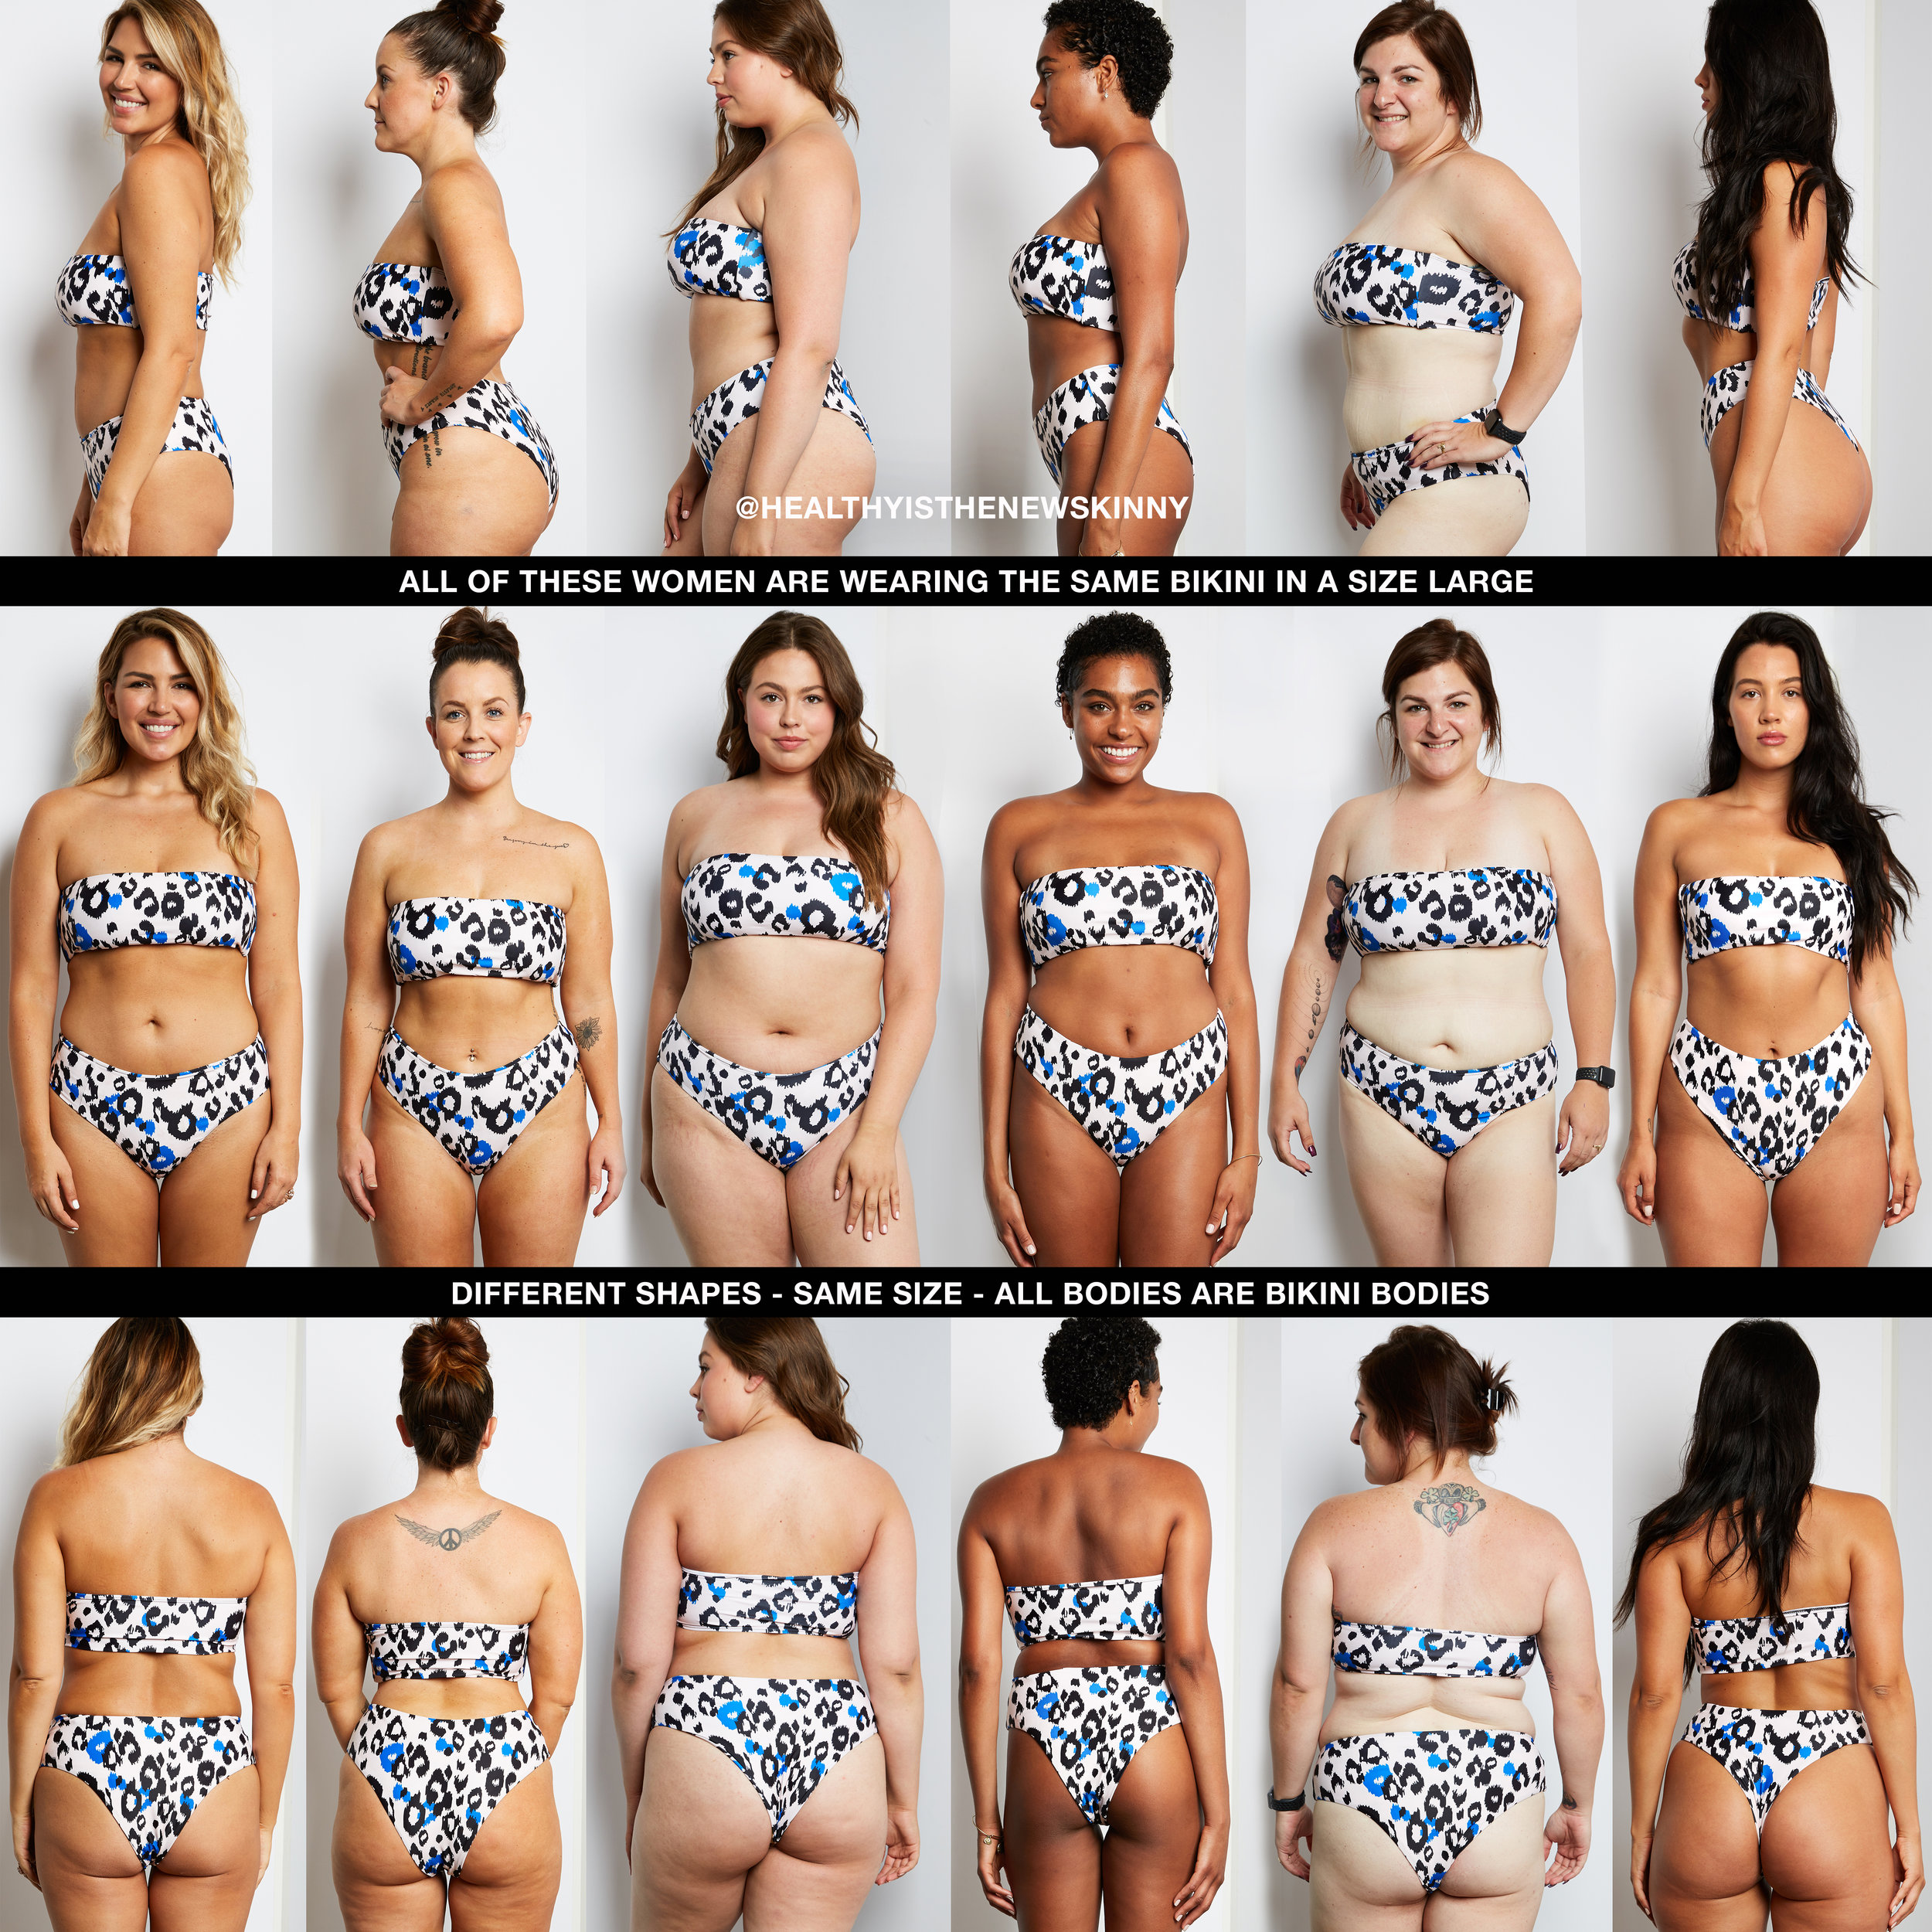 6 Women, 6 Different Shapes, Wearing the Same Size Bikini